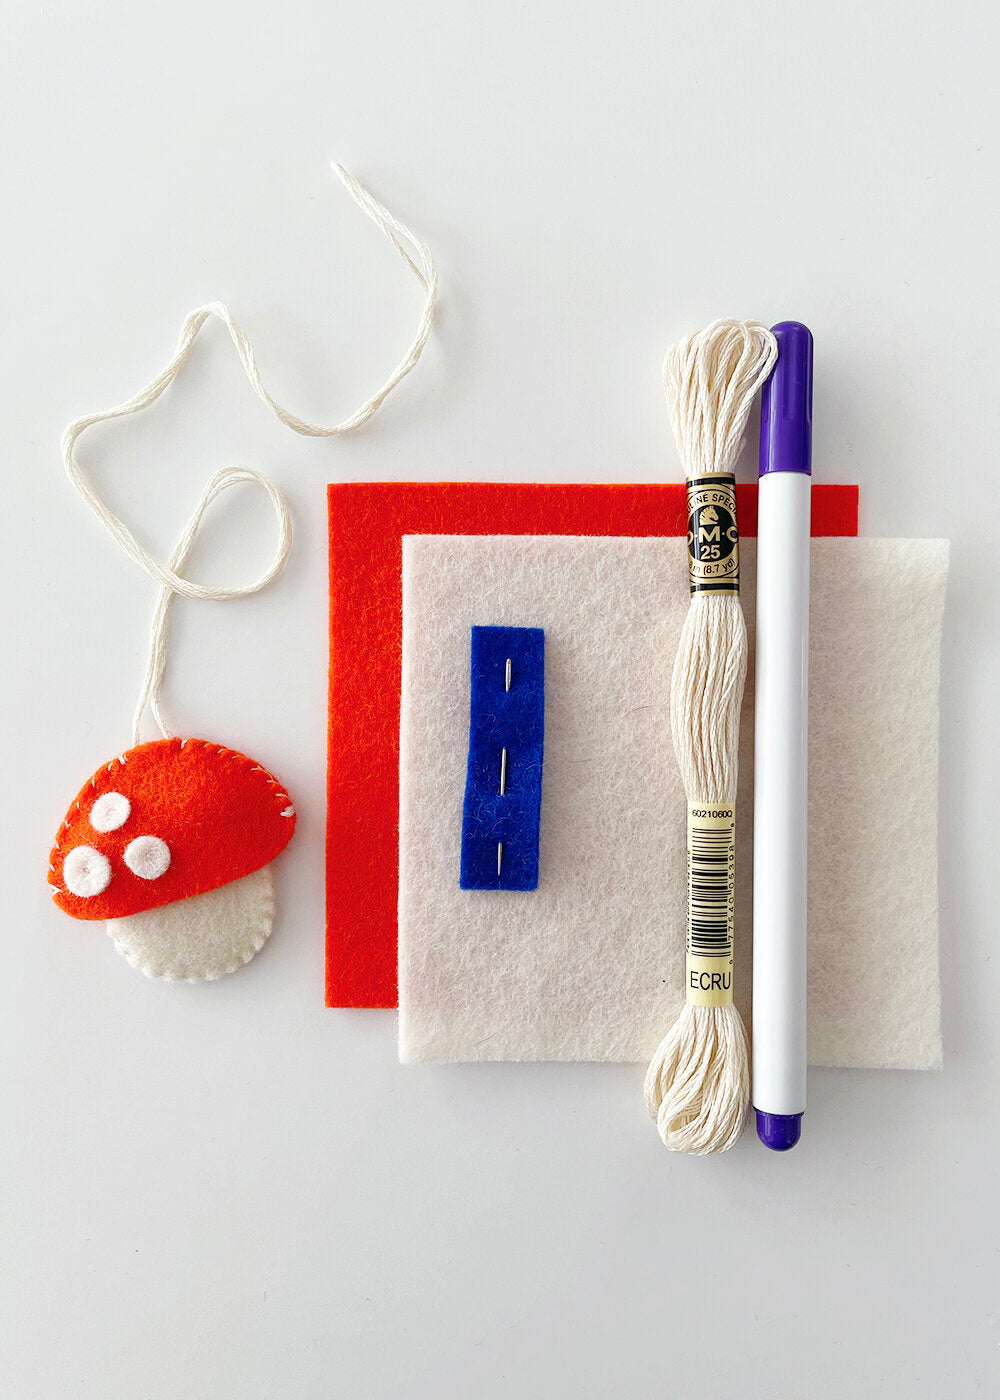 Mushroom Secret Pocket Necklace Kits | Fair Play Projects